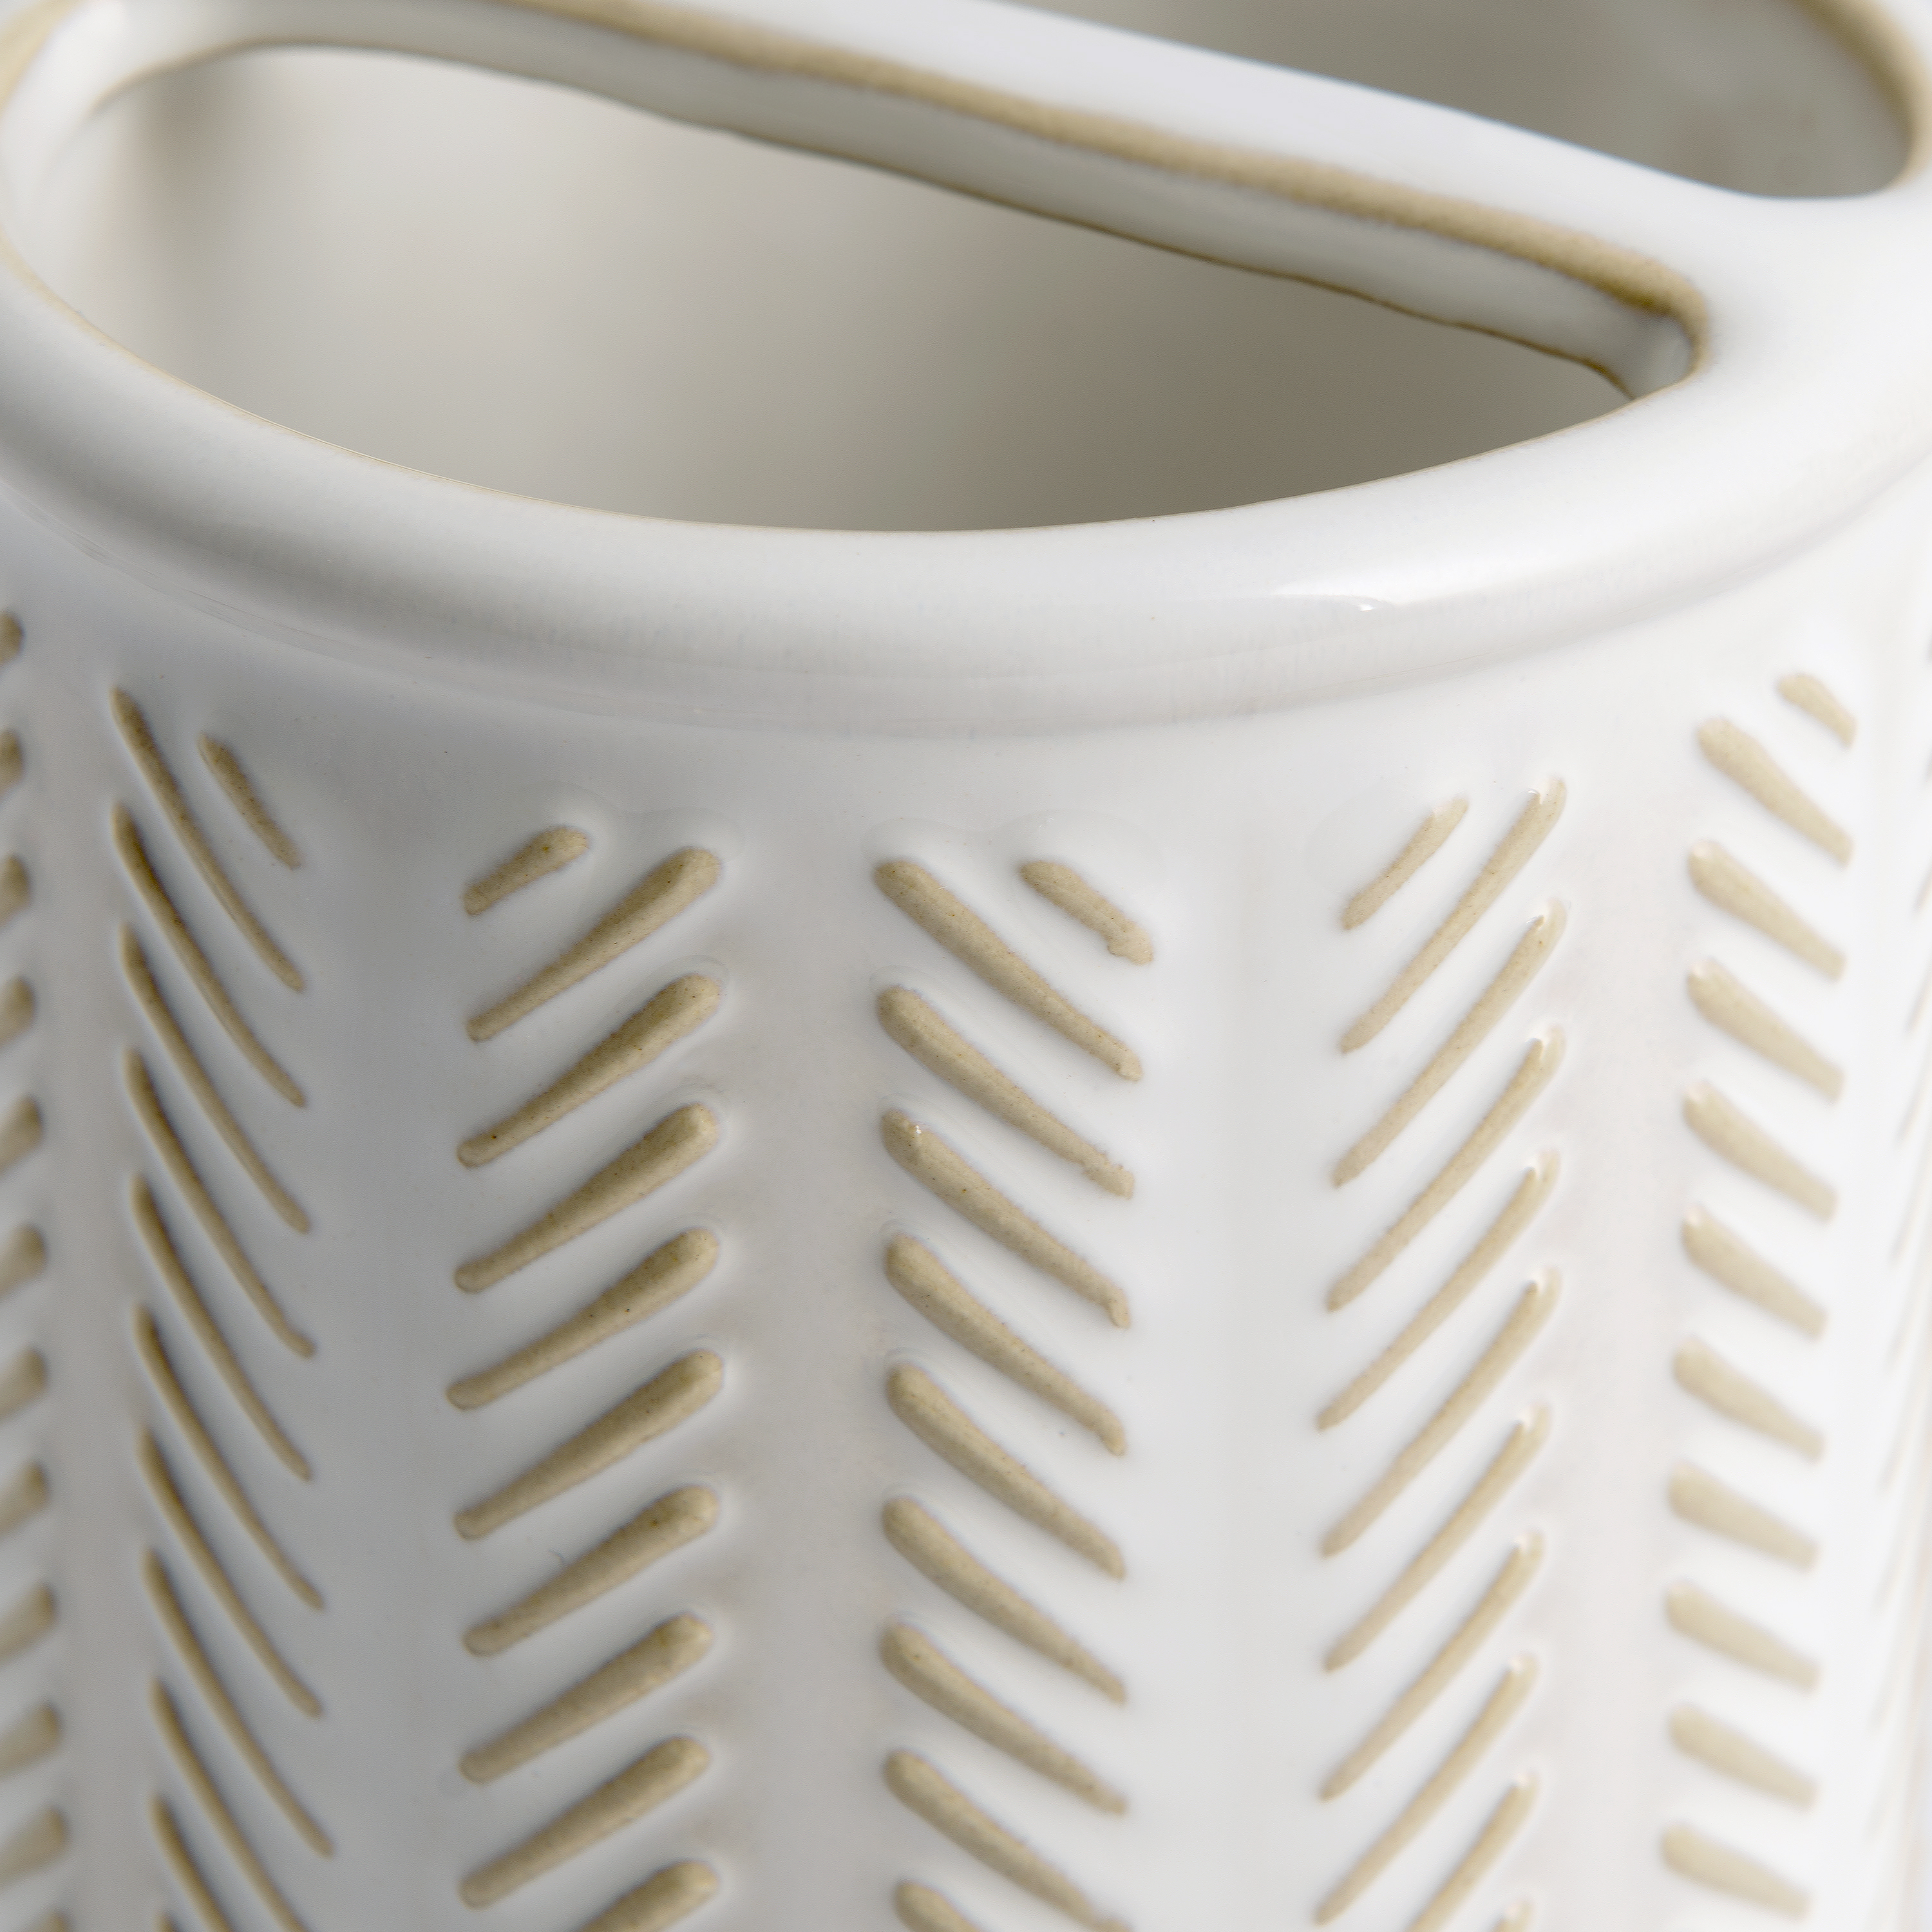 Better Homes & Gardens Reactive Glazed Textured Ceramic Toothbrush Holder in Creamy White - image 4 of 6